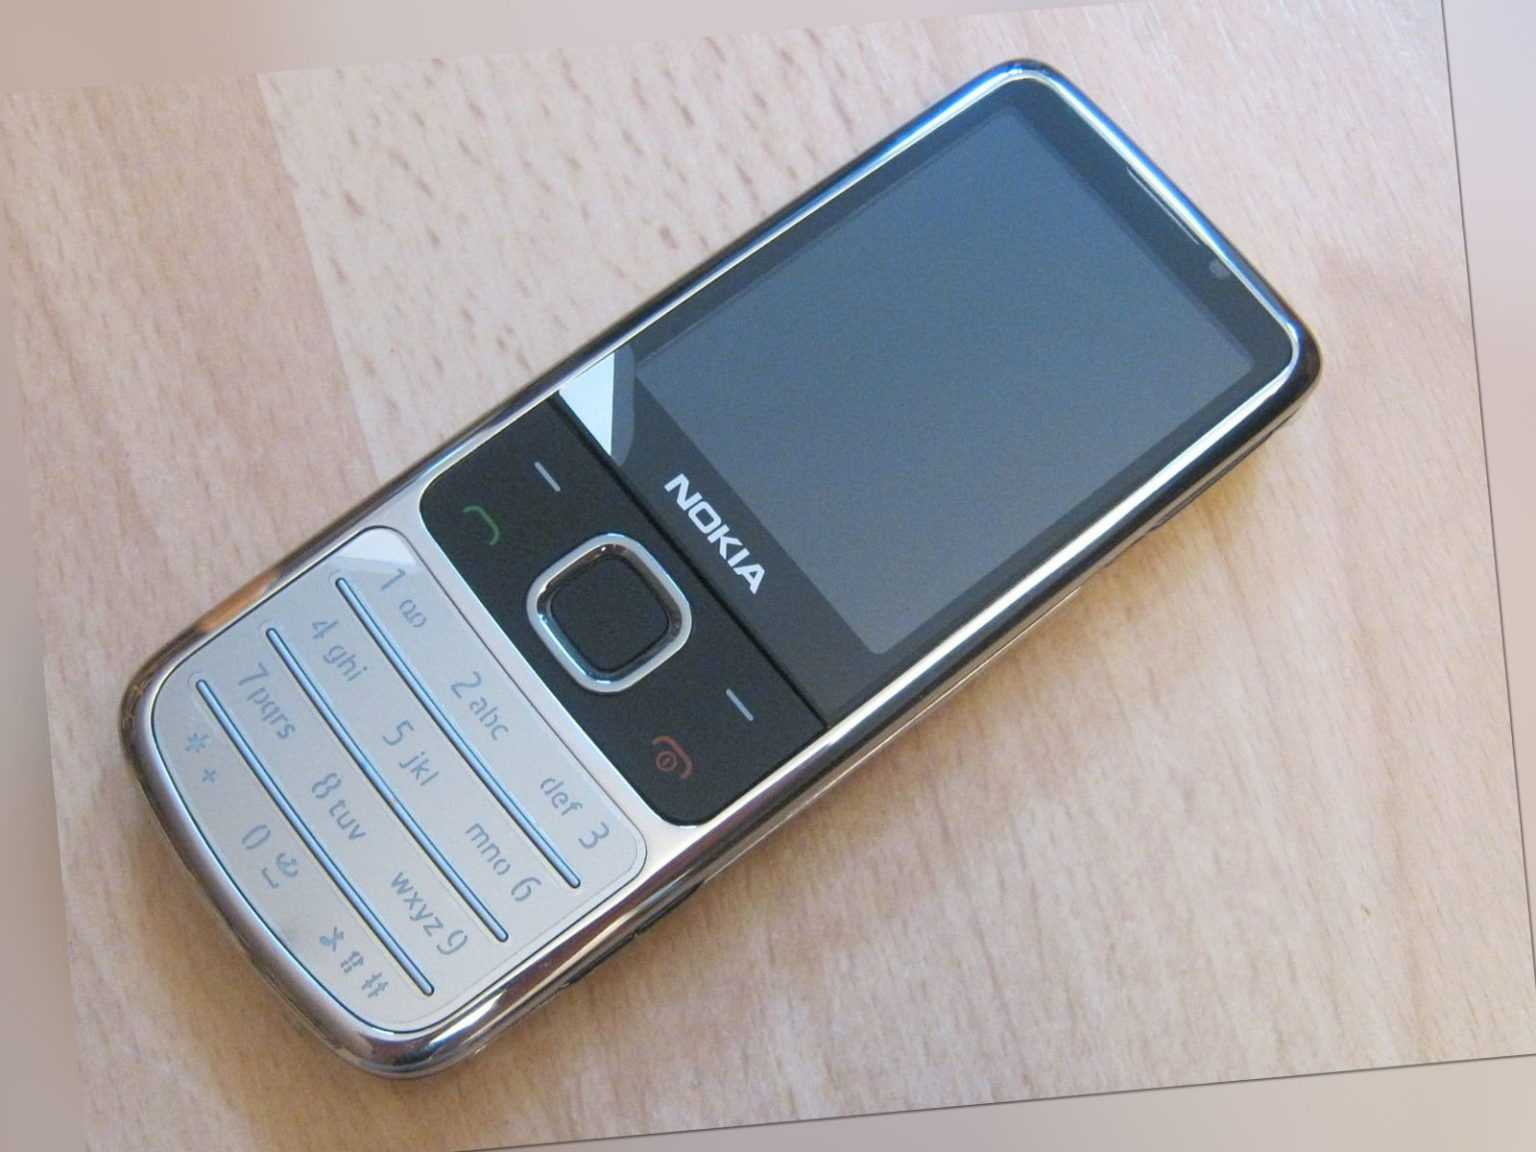 Nokia 6700 classic > Chrom  ohne Simlock / ohne Branding  topp !!!